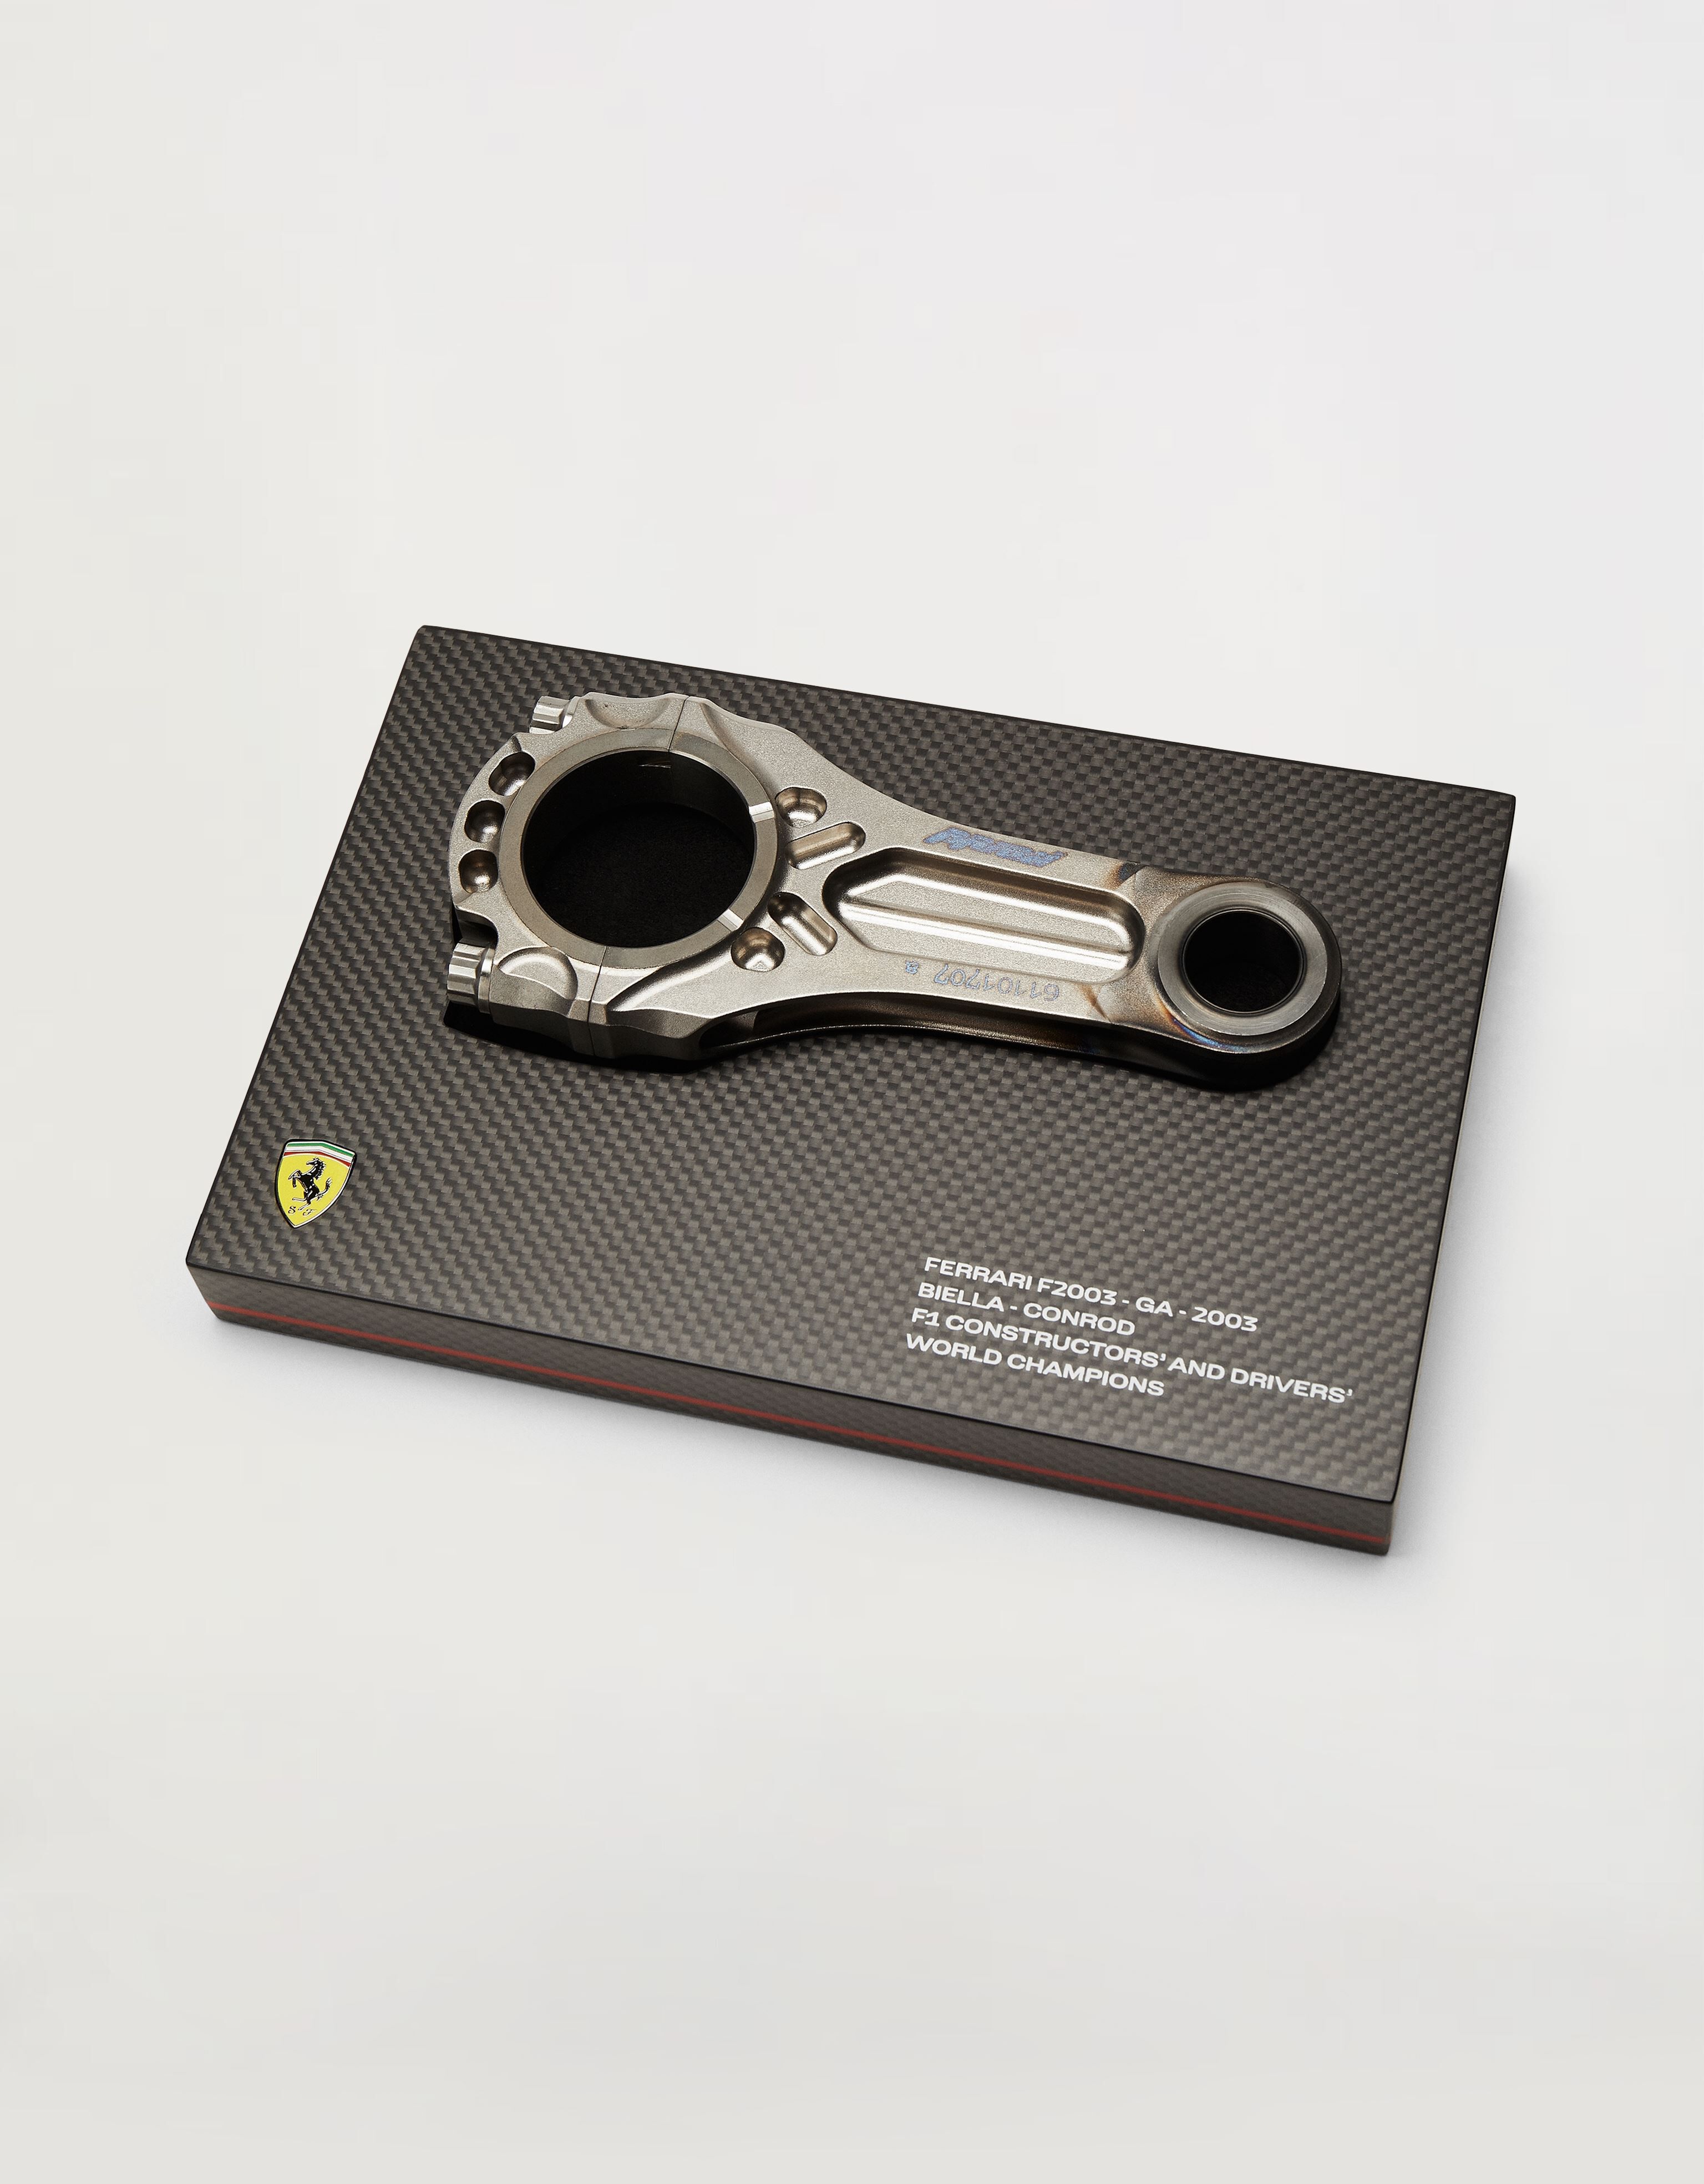 Ferrari Original piston from the F2003, winner of the 2003 Constructors' and Drivers' Championships Black 47671f